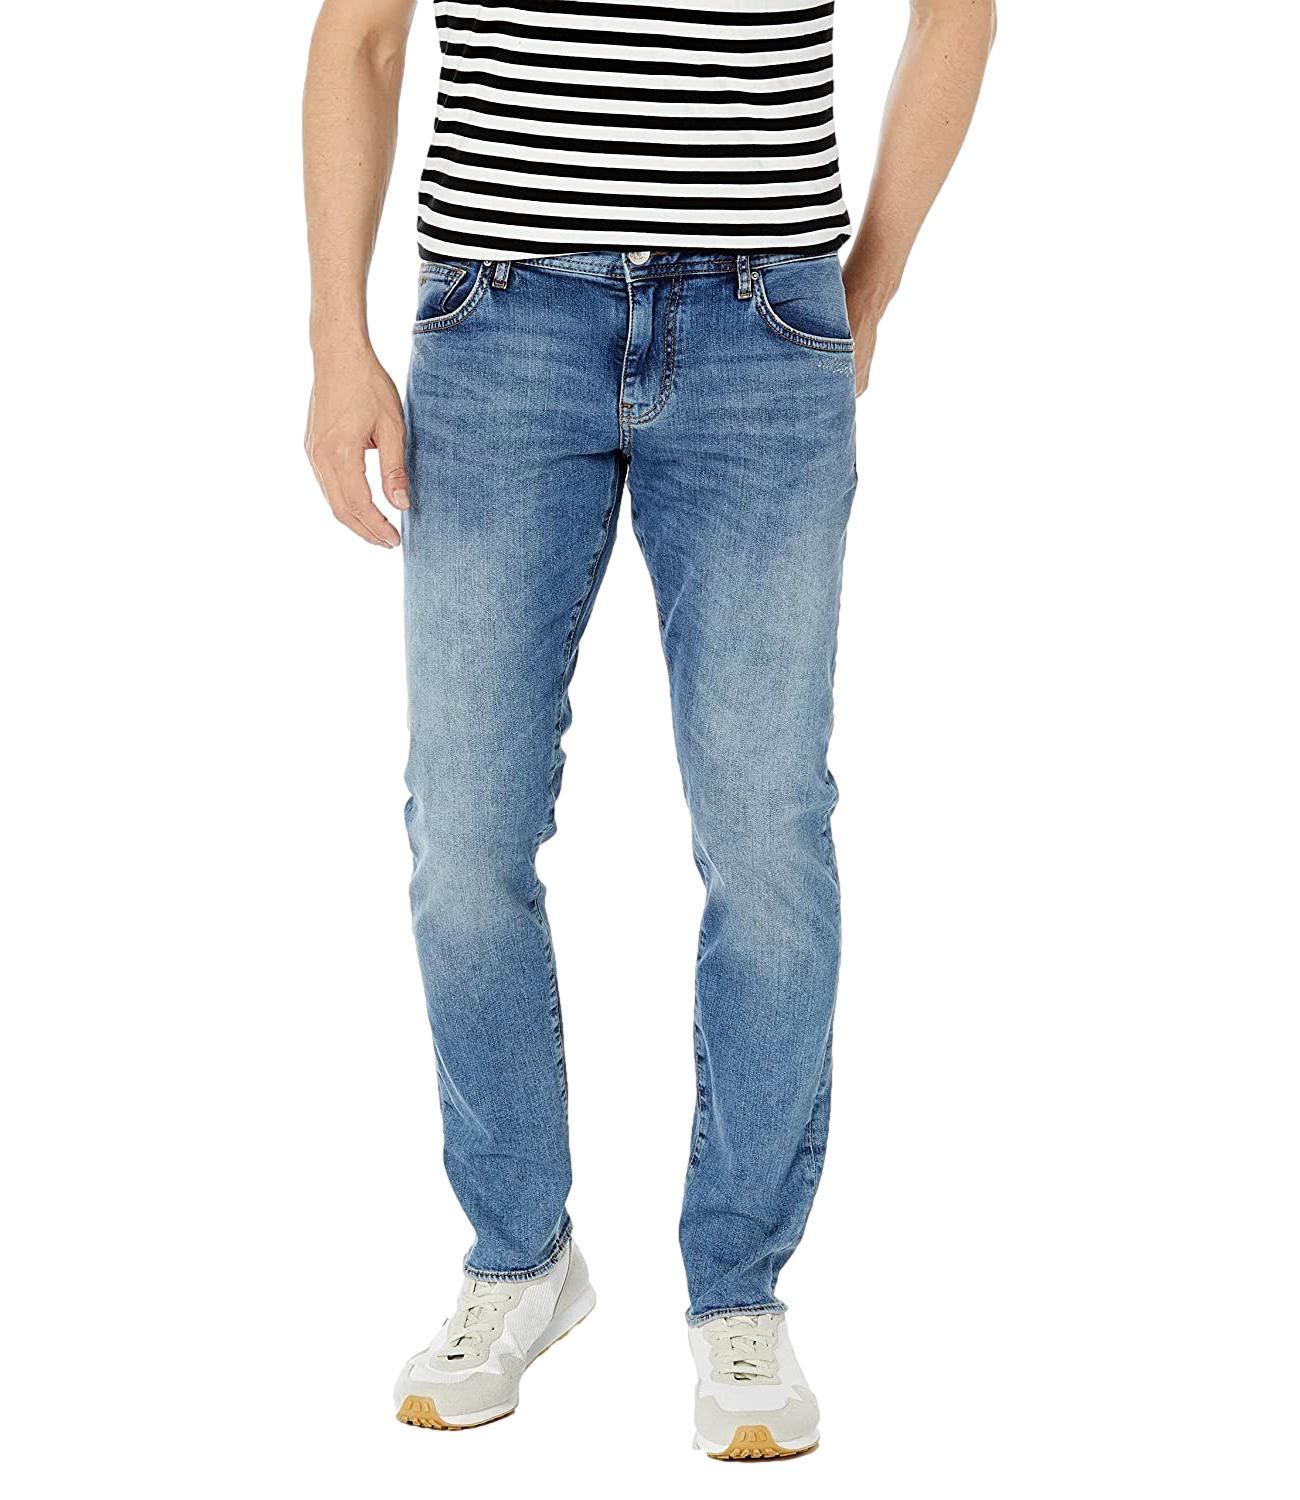 Lightweight men's jeans in slim fit cotton